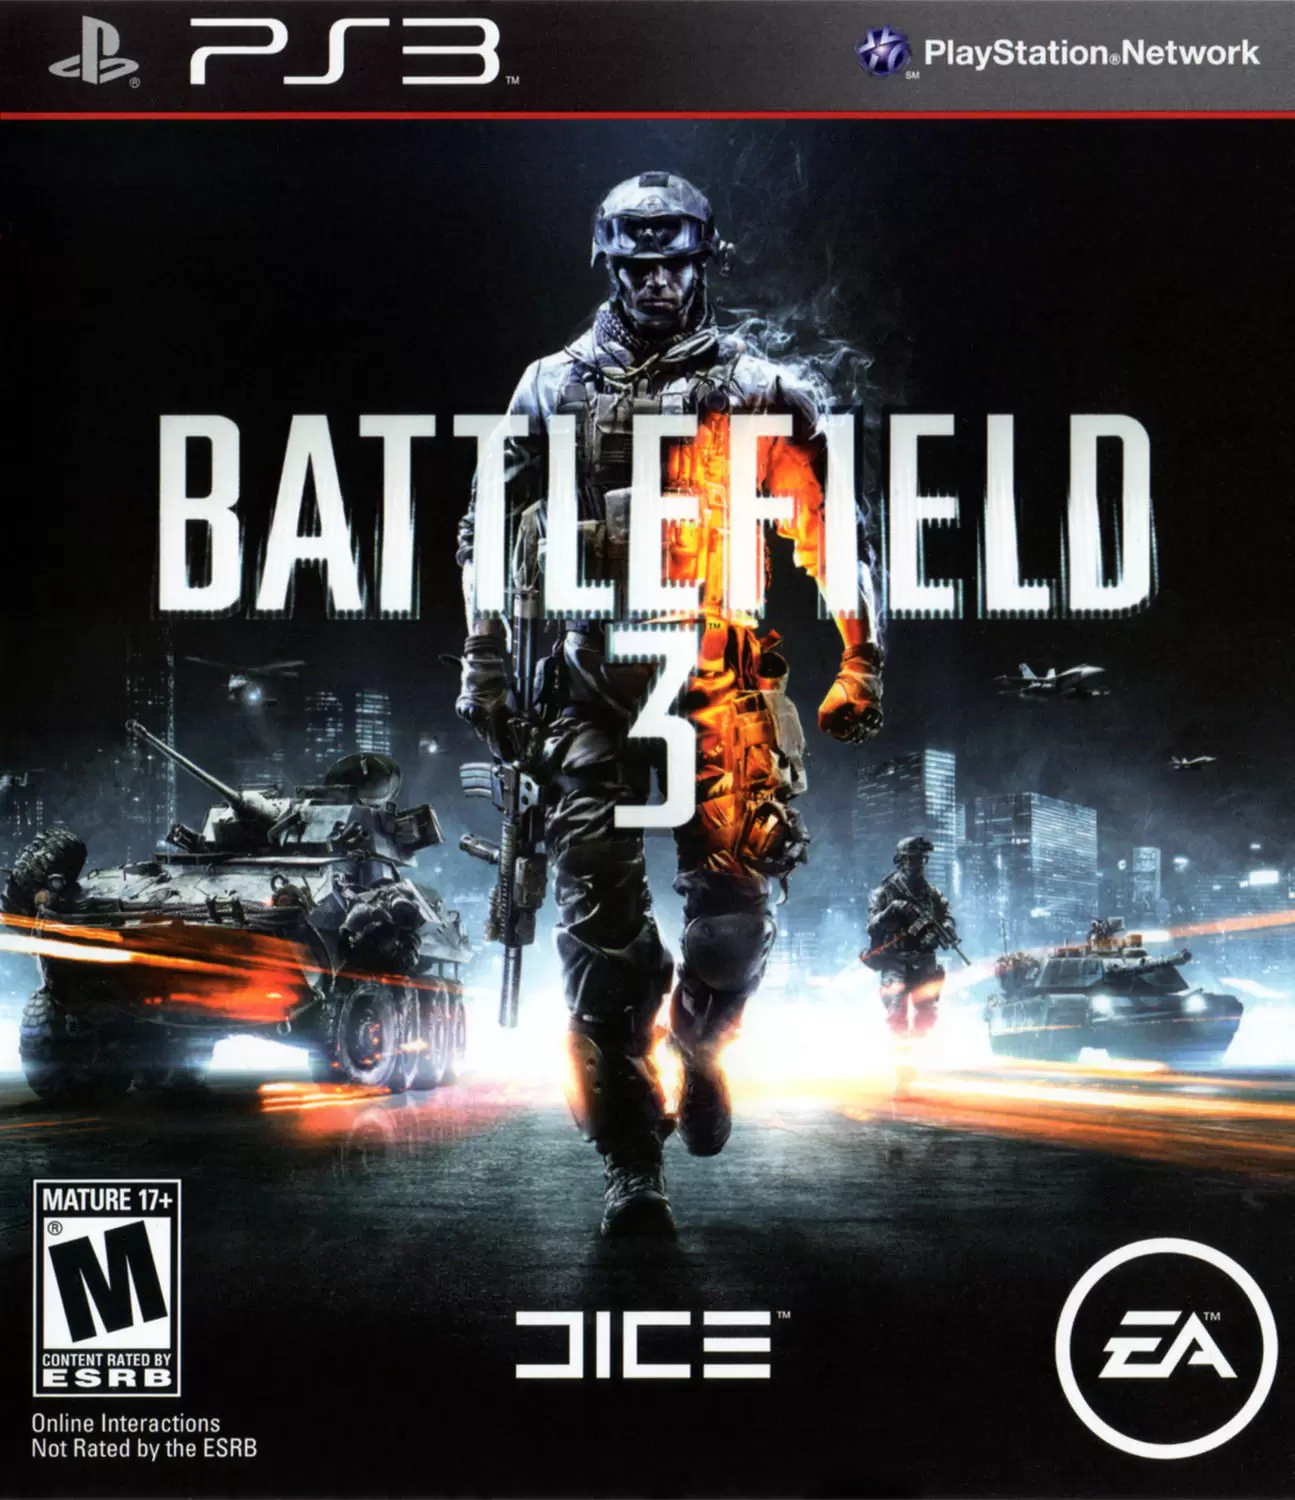 PS3 Games - Battlefield 3